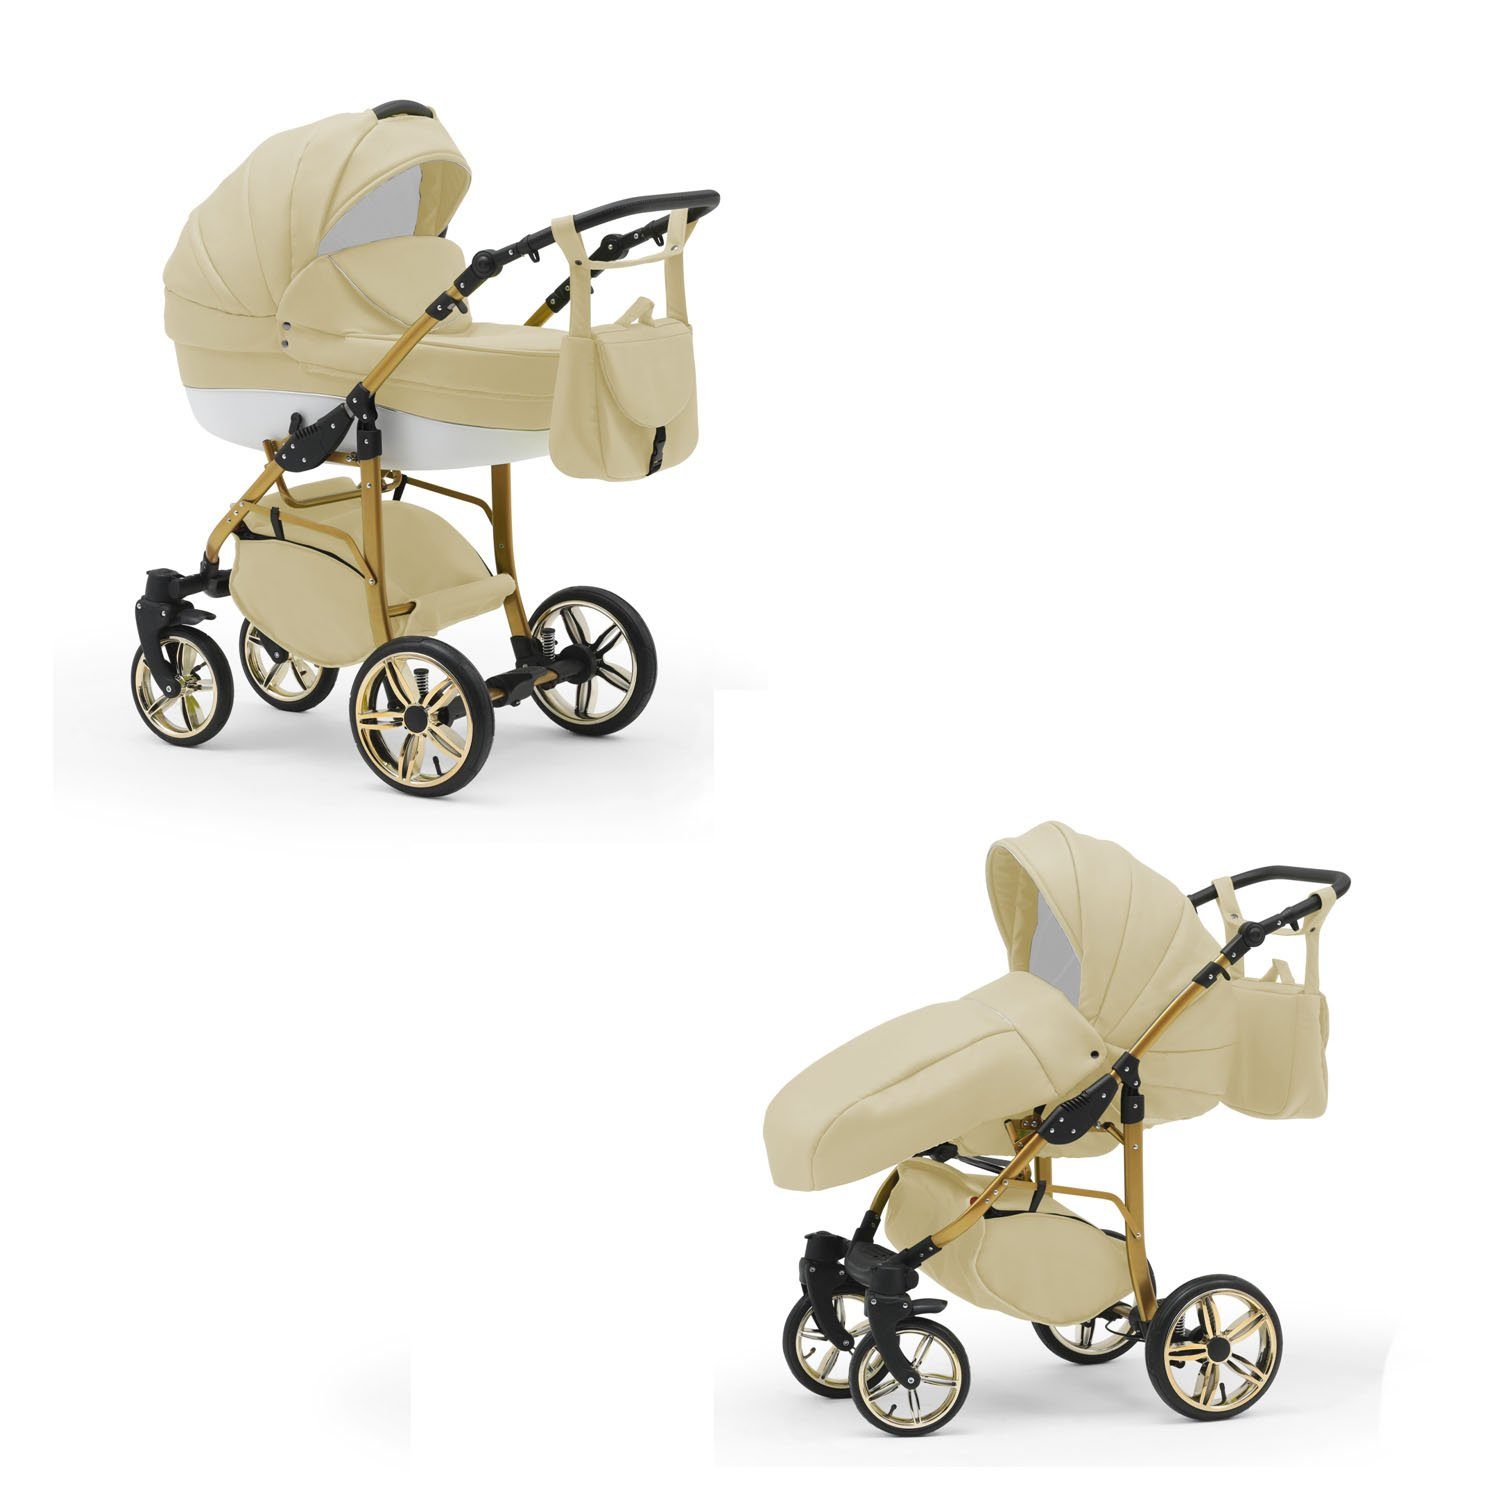 1 2 Beige-Weiß Farben - babies-on-wheels Gold Teile 46 in Cosmo Kombi-Kinderwagen Kinderwagen-Set 13 in -